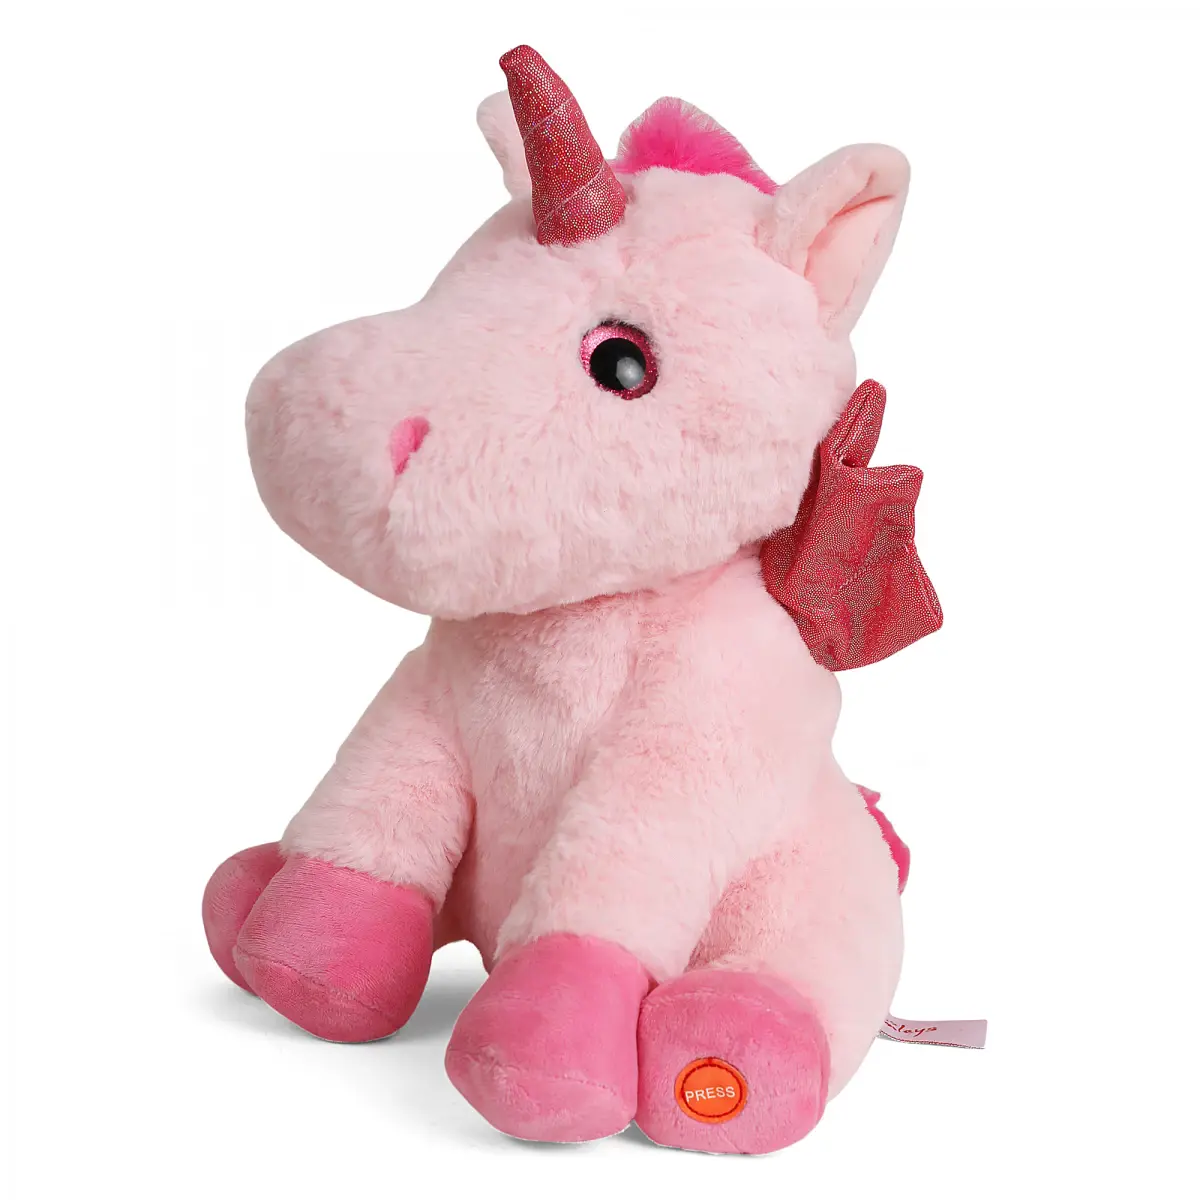 Fuzzbuzz Light Up Horn Unicorn Soft Toys for Kids, 18M+, Pink